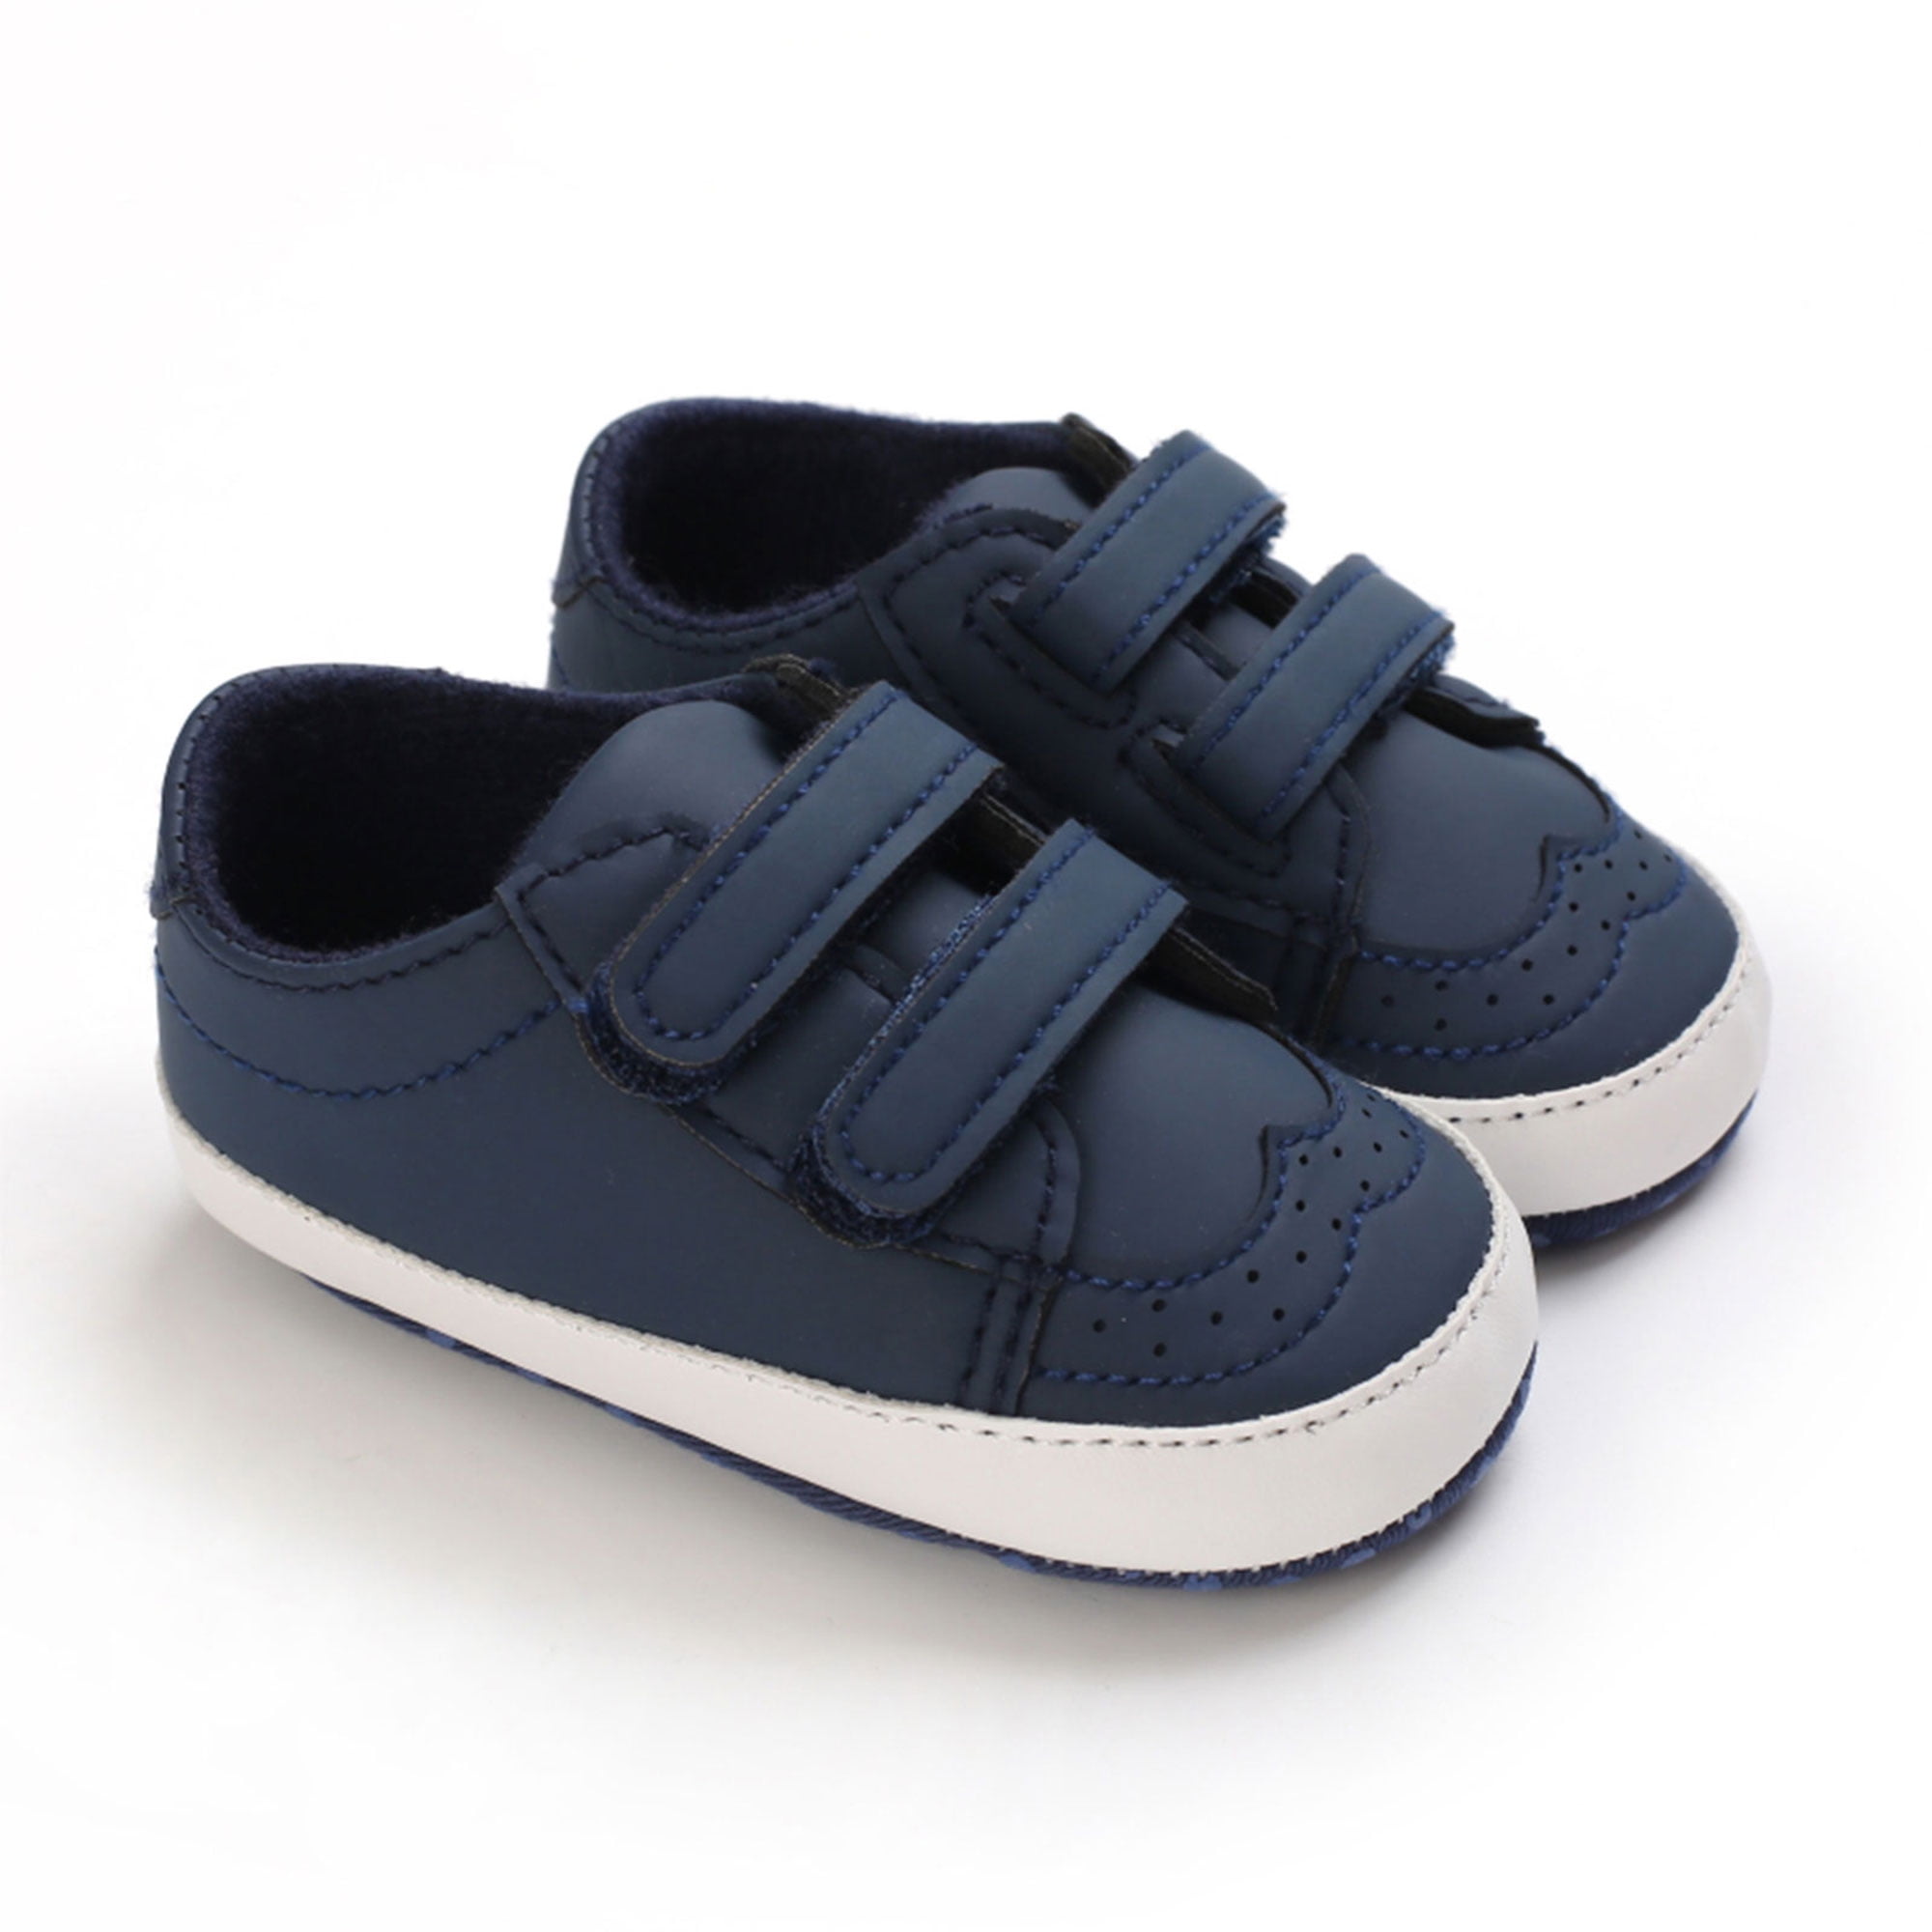 Toddler Baby Kids Girl Boy Soft Crib Shoes Leather Anti-slip Sneakers Prewalkers 